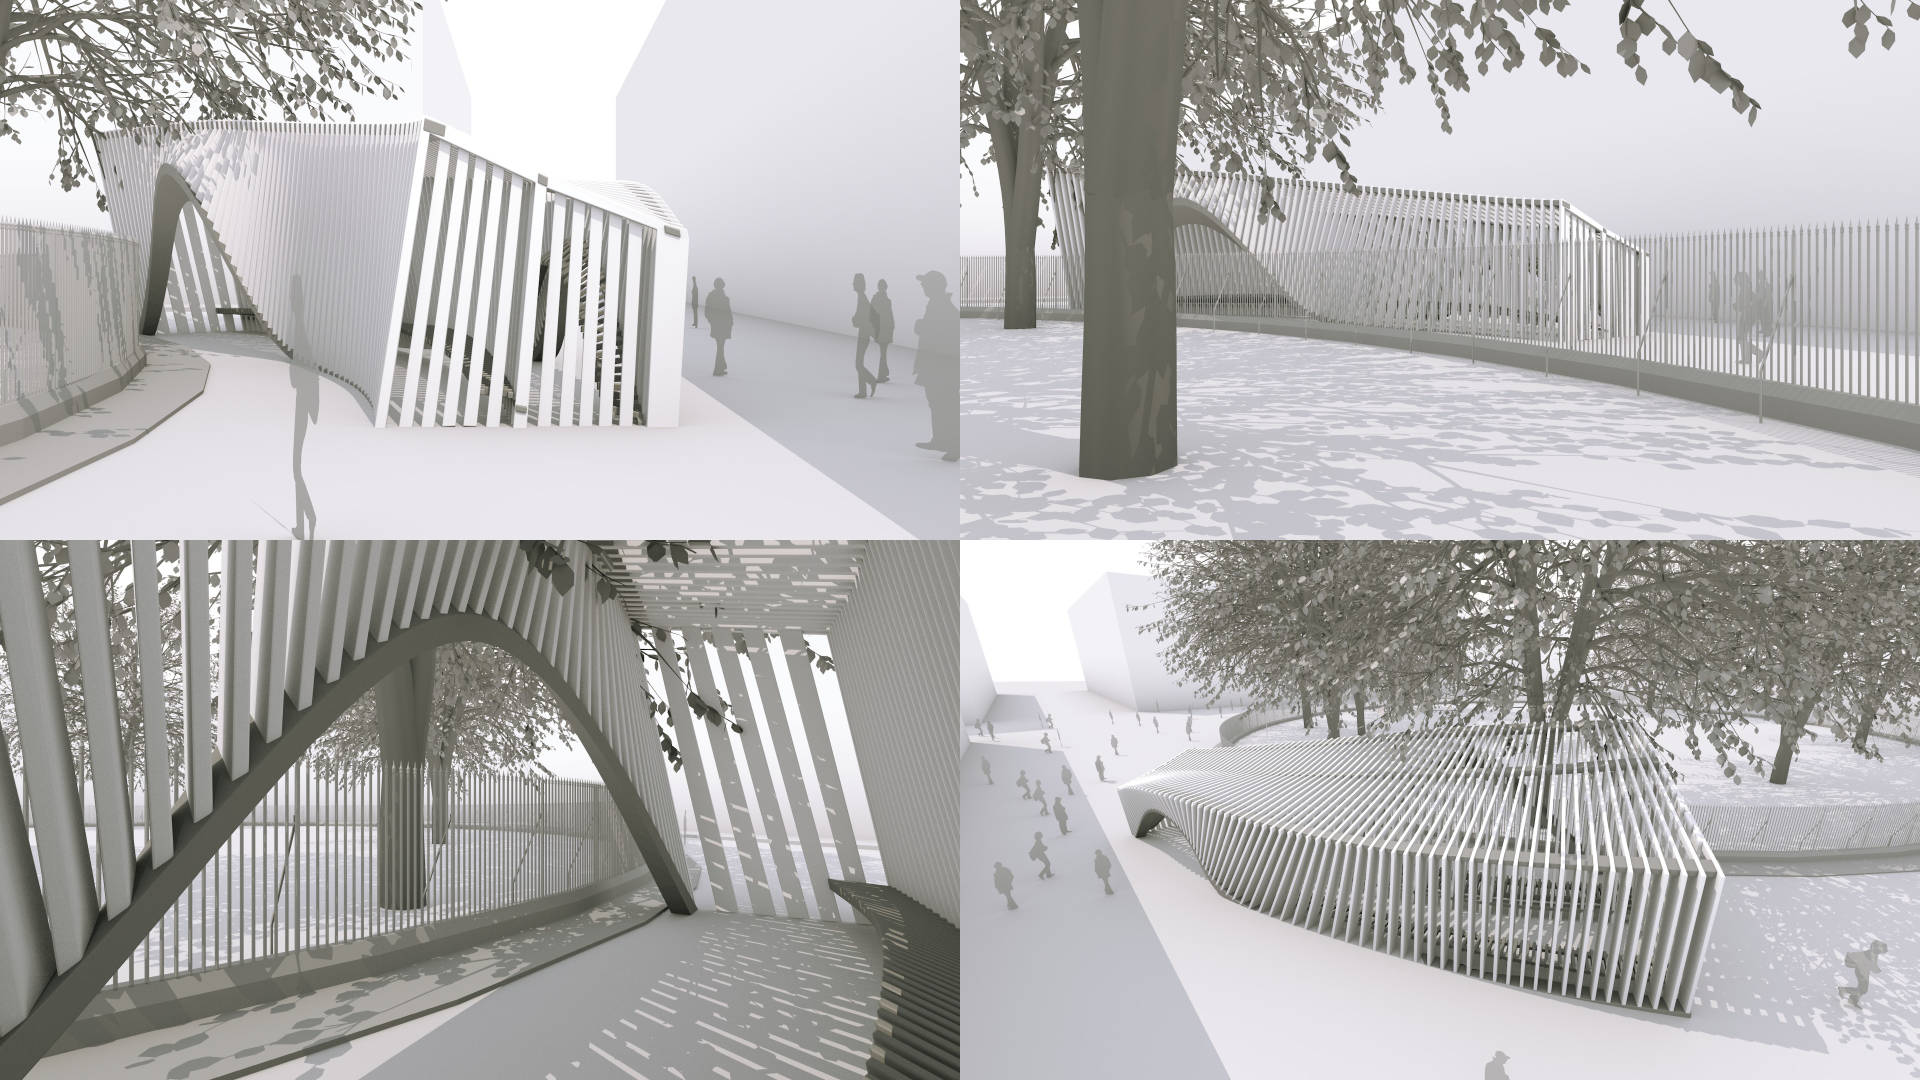 Architectural Concept Design - Creating a pavilion - Tutorials, Tips